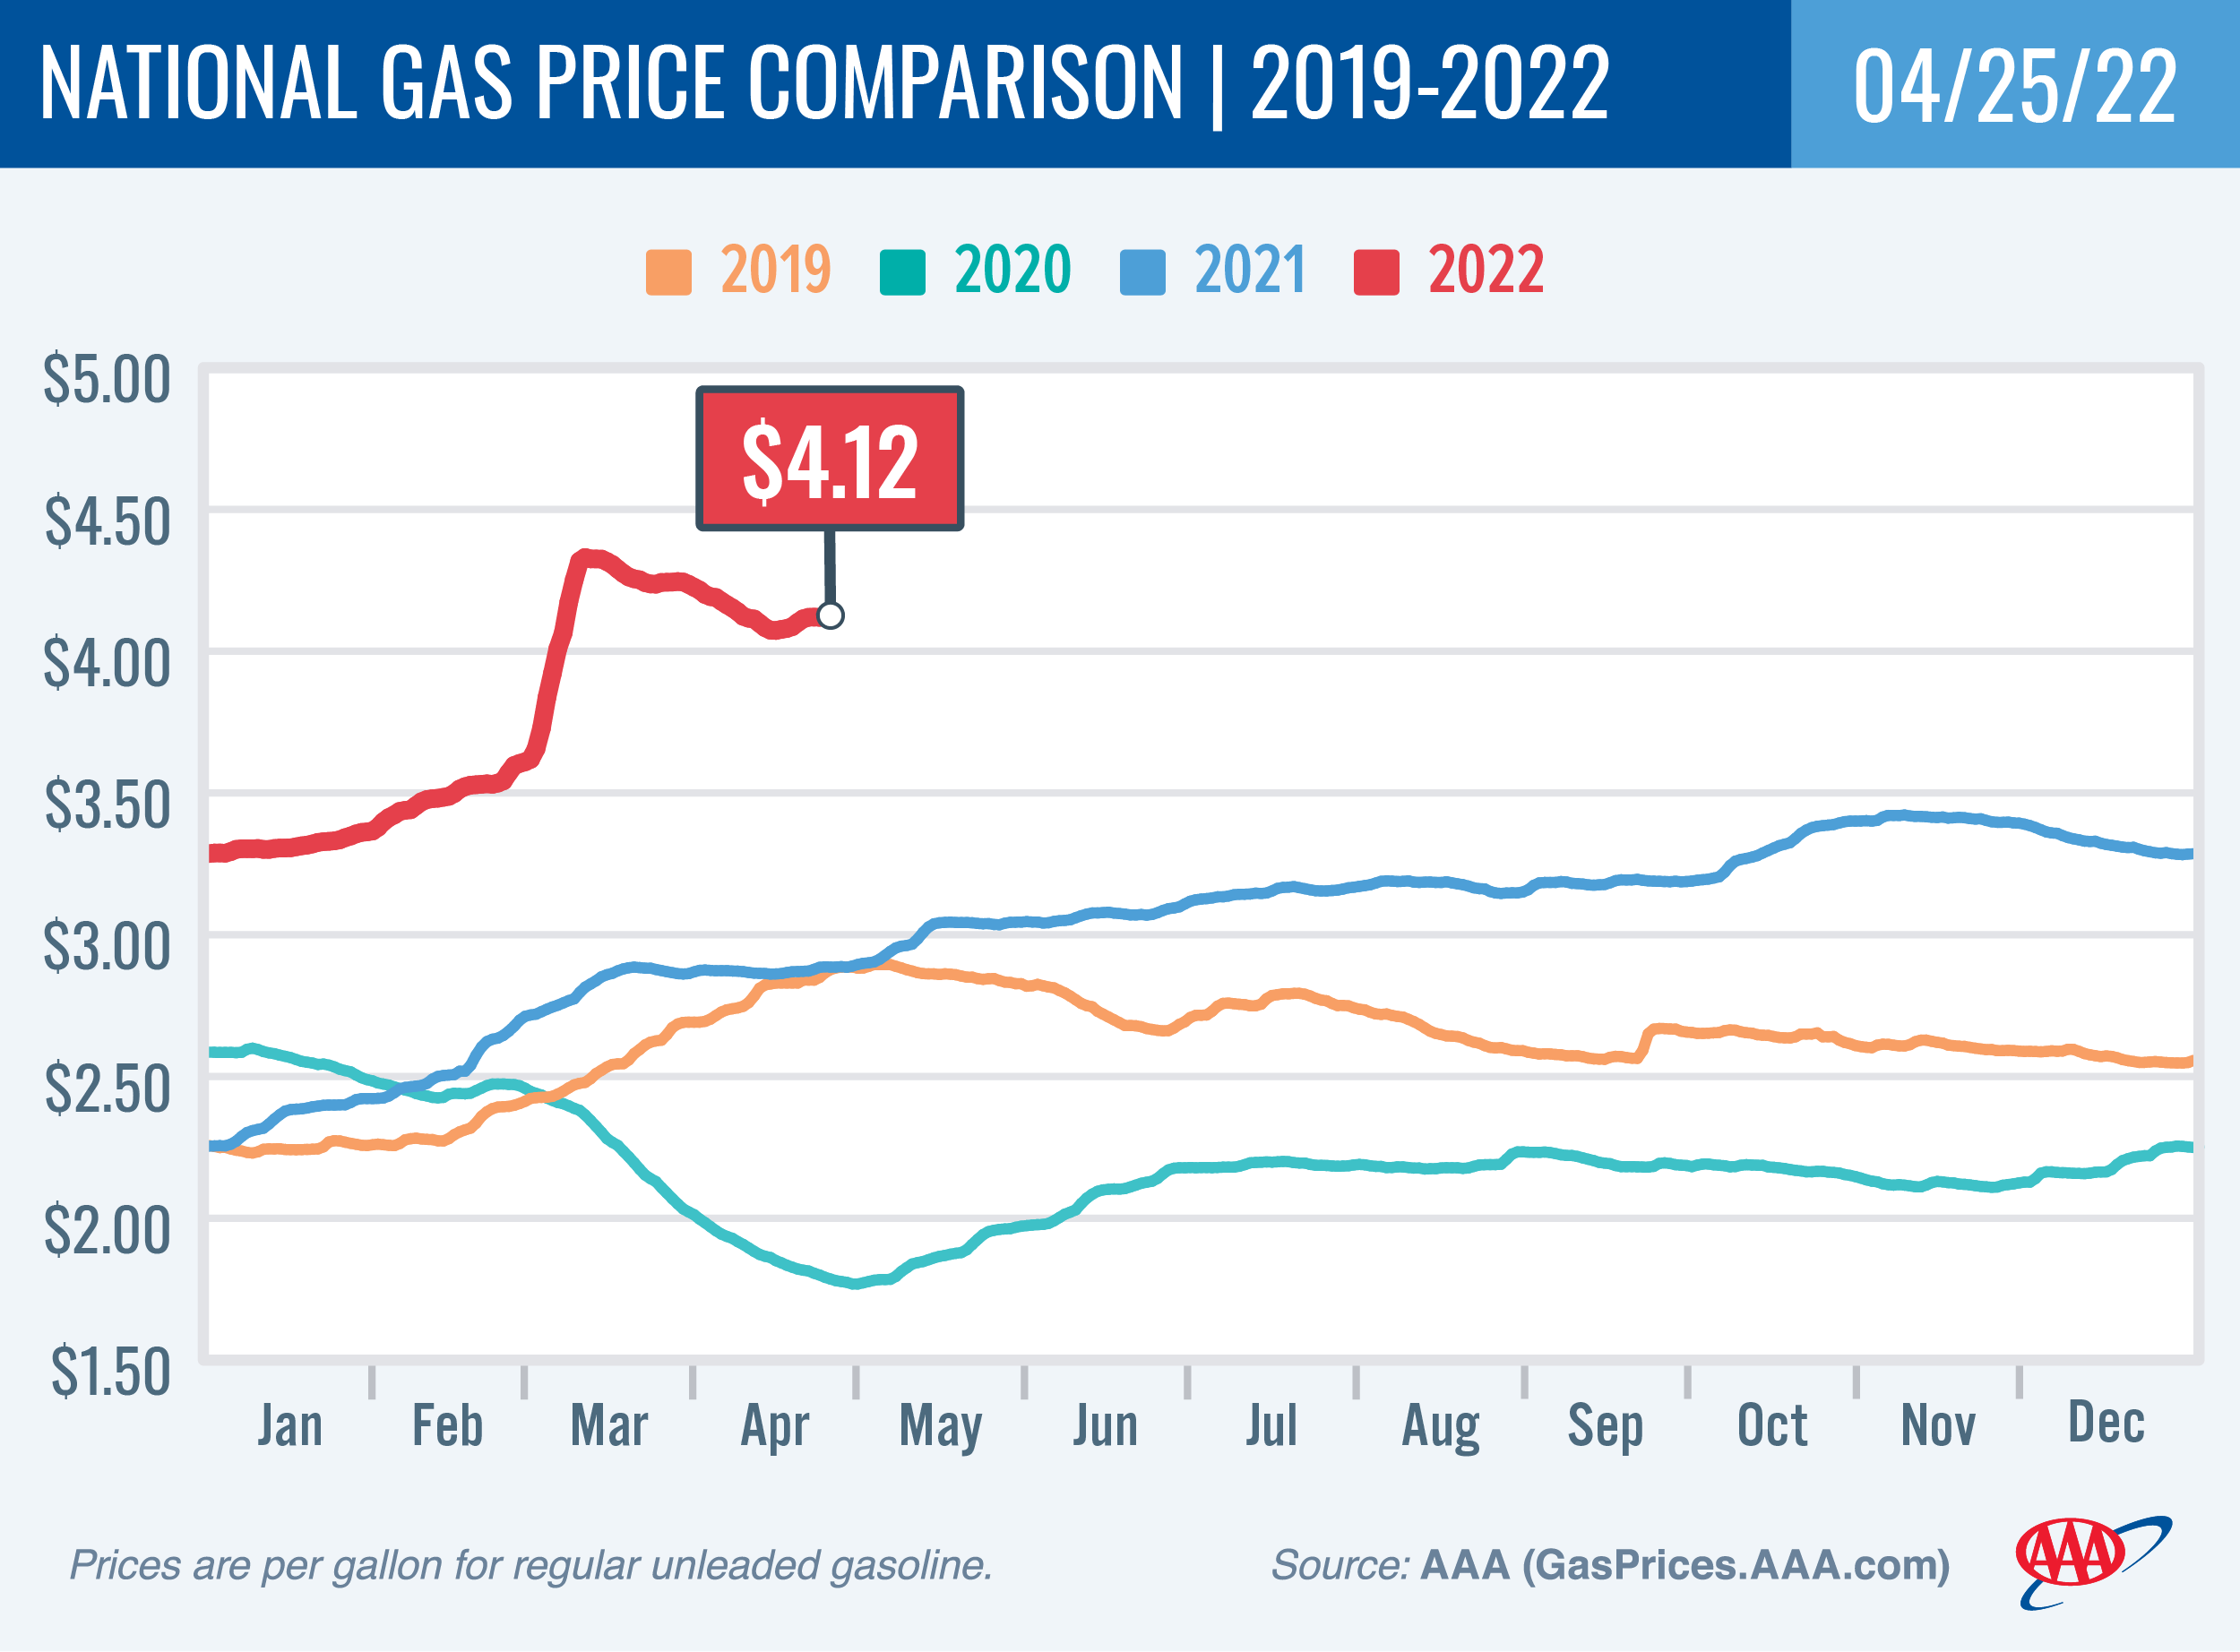 National Gas Price Comparison for April 25, 2022